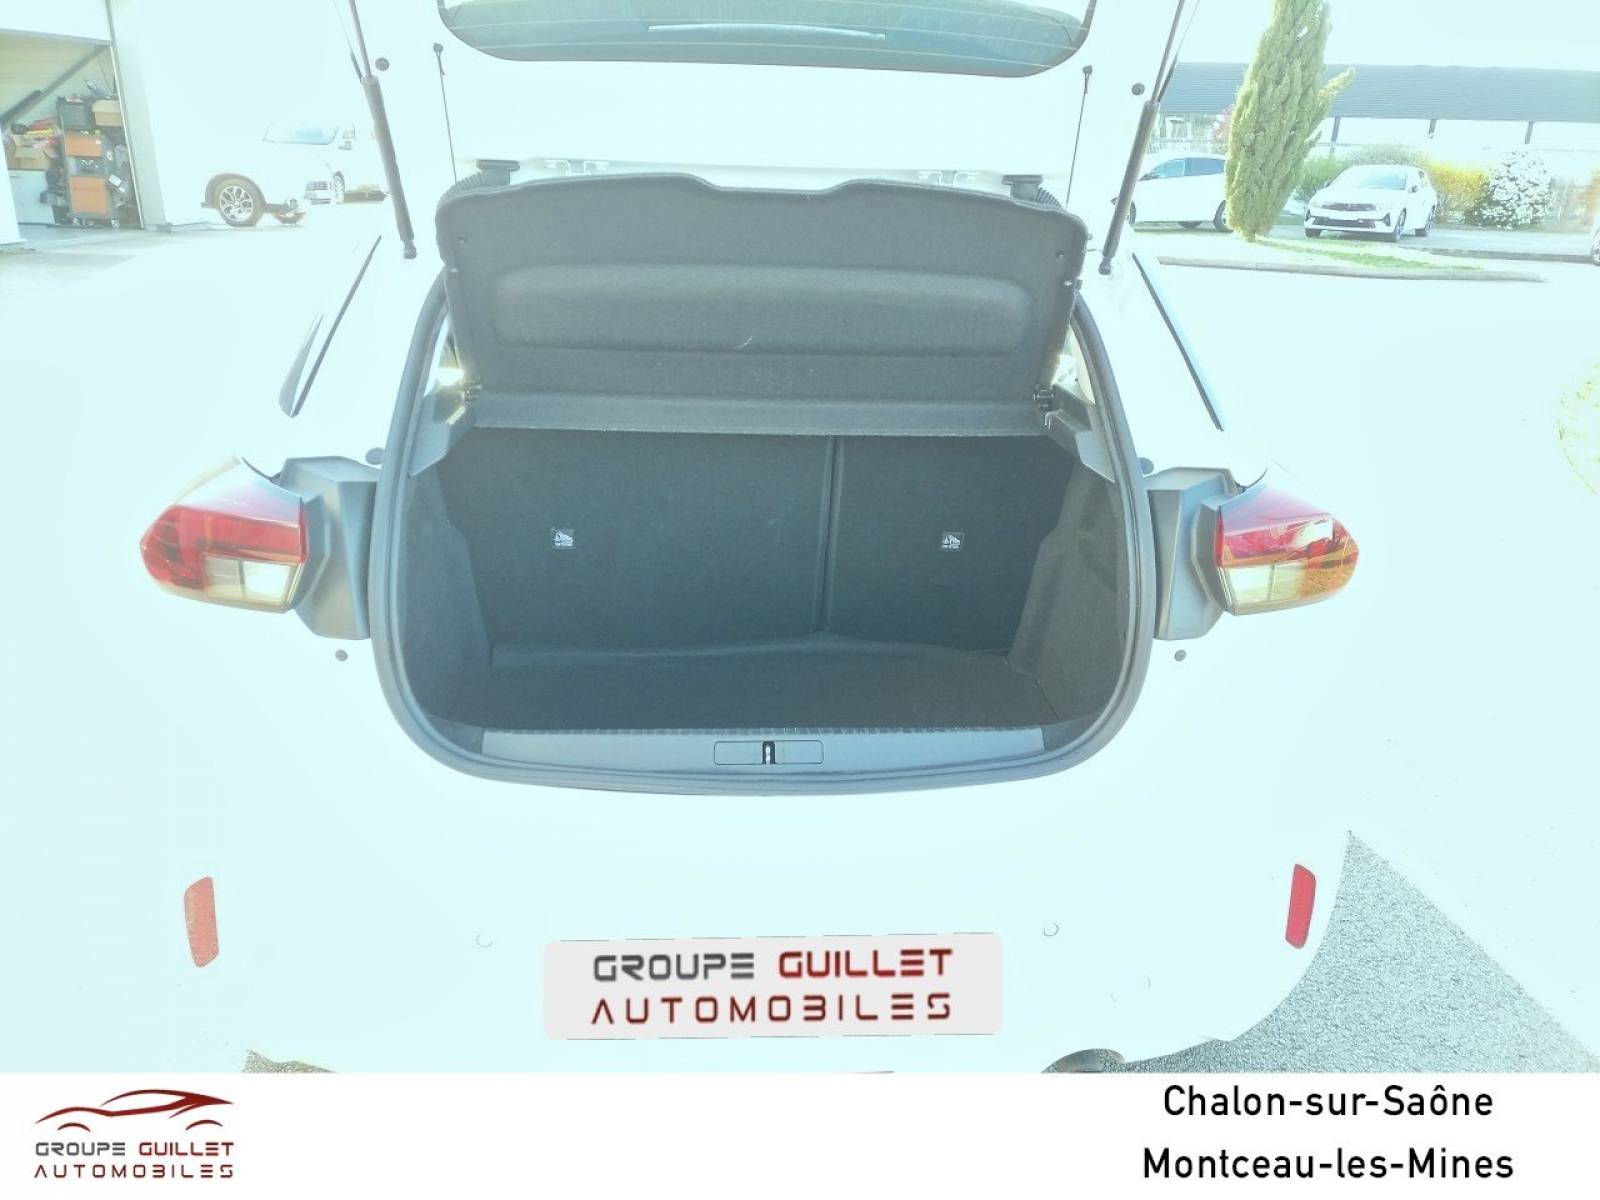 OPEL Corsa 1.2 75 ch BVM5 - véhicule d'occasion - Groupe Guillet - Opel Magicauto Chalon - 71380 - Saint-Marcel - 6